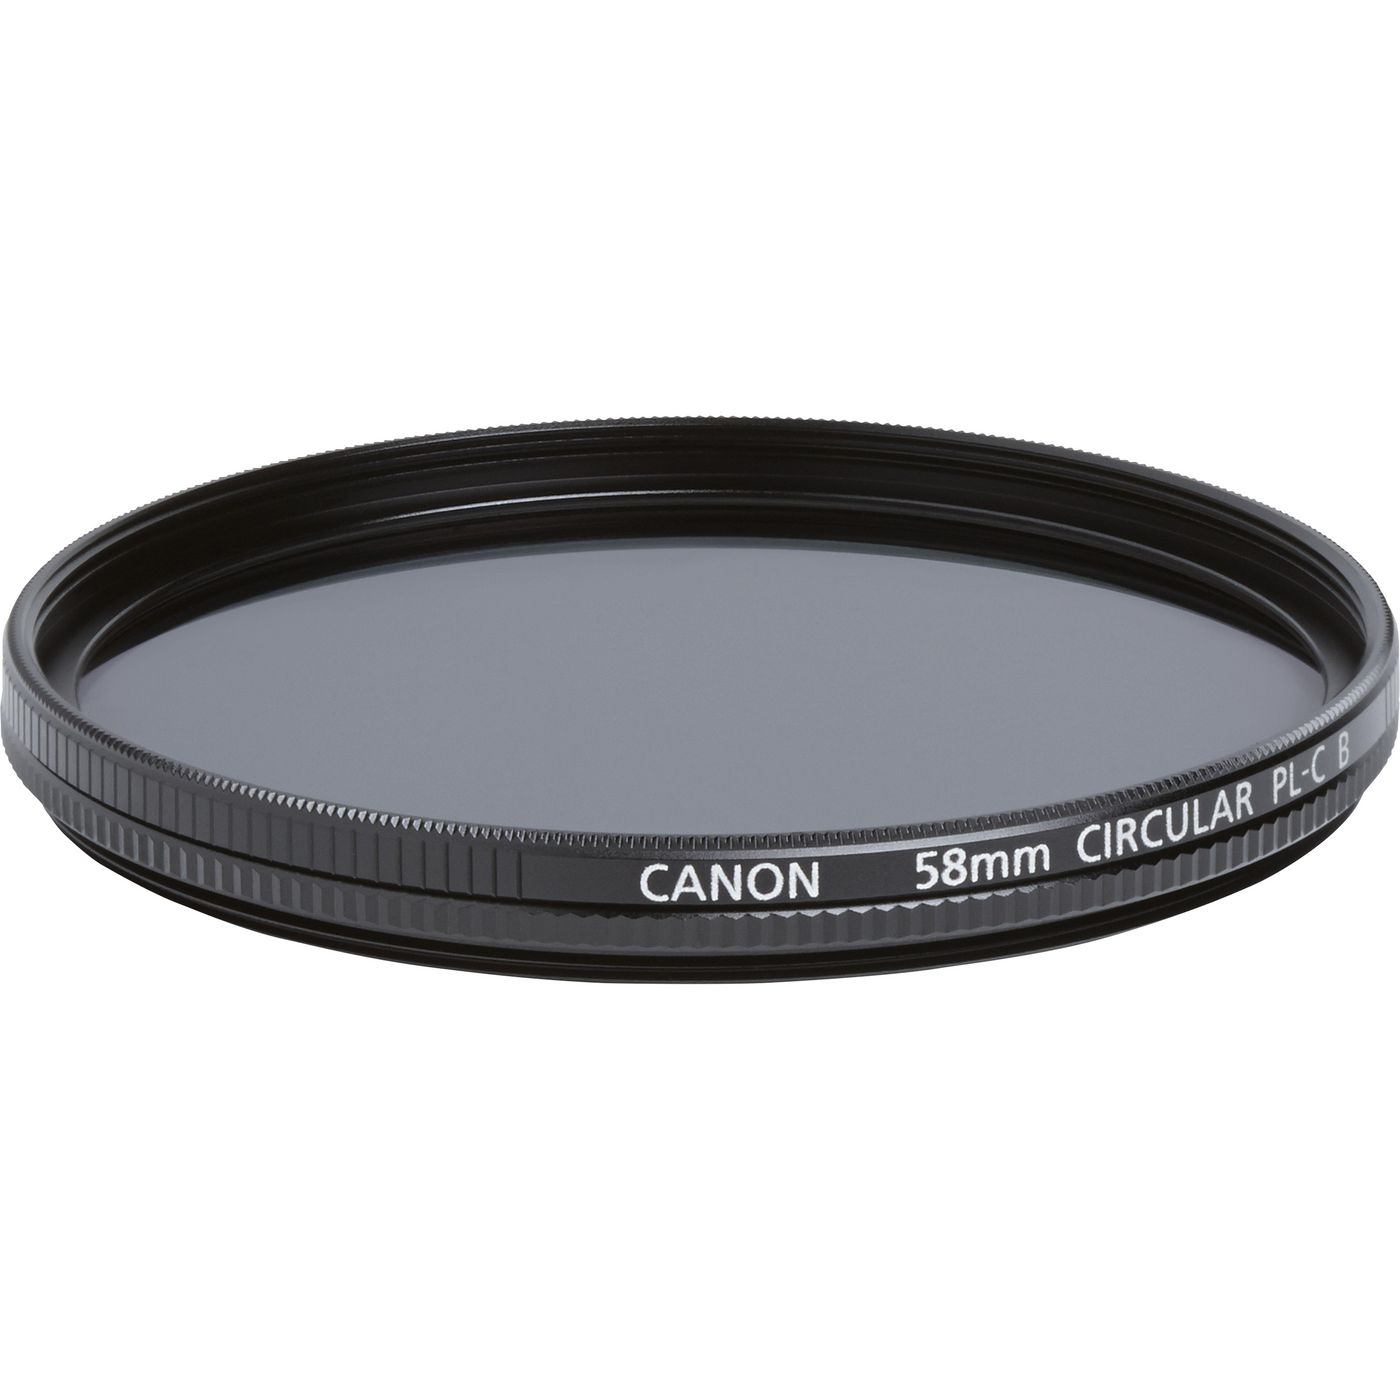 Canon 2188B001 58mm PL-C B-filter 